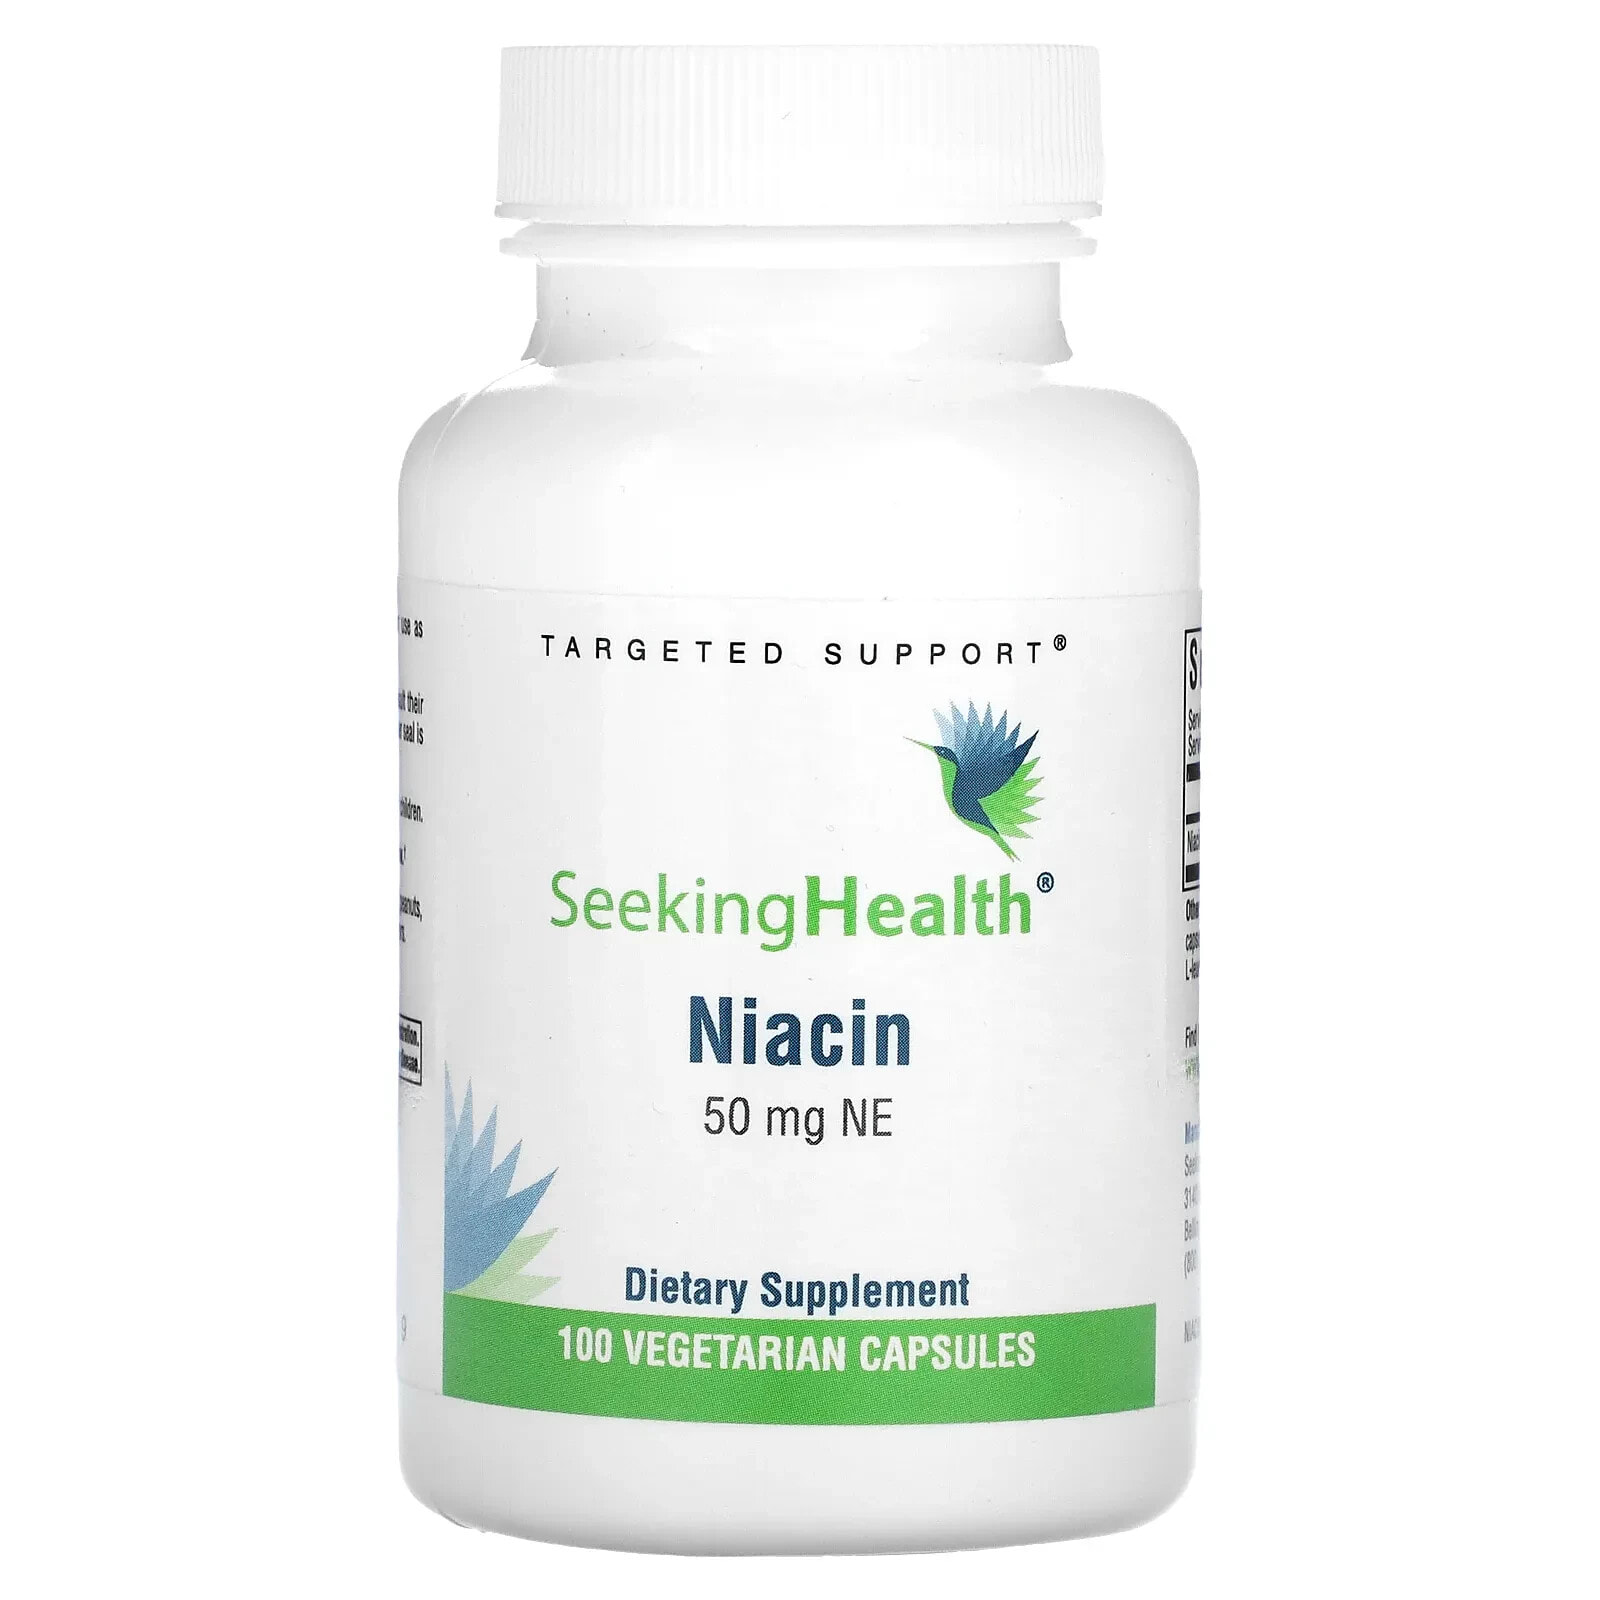 Niacin, 50 mg NE, 100 Vegetarian Capsules